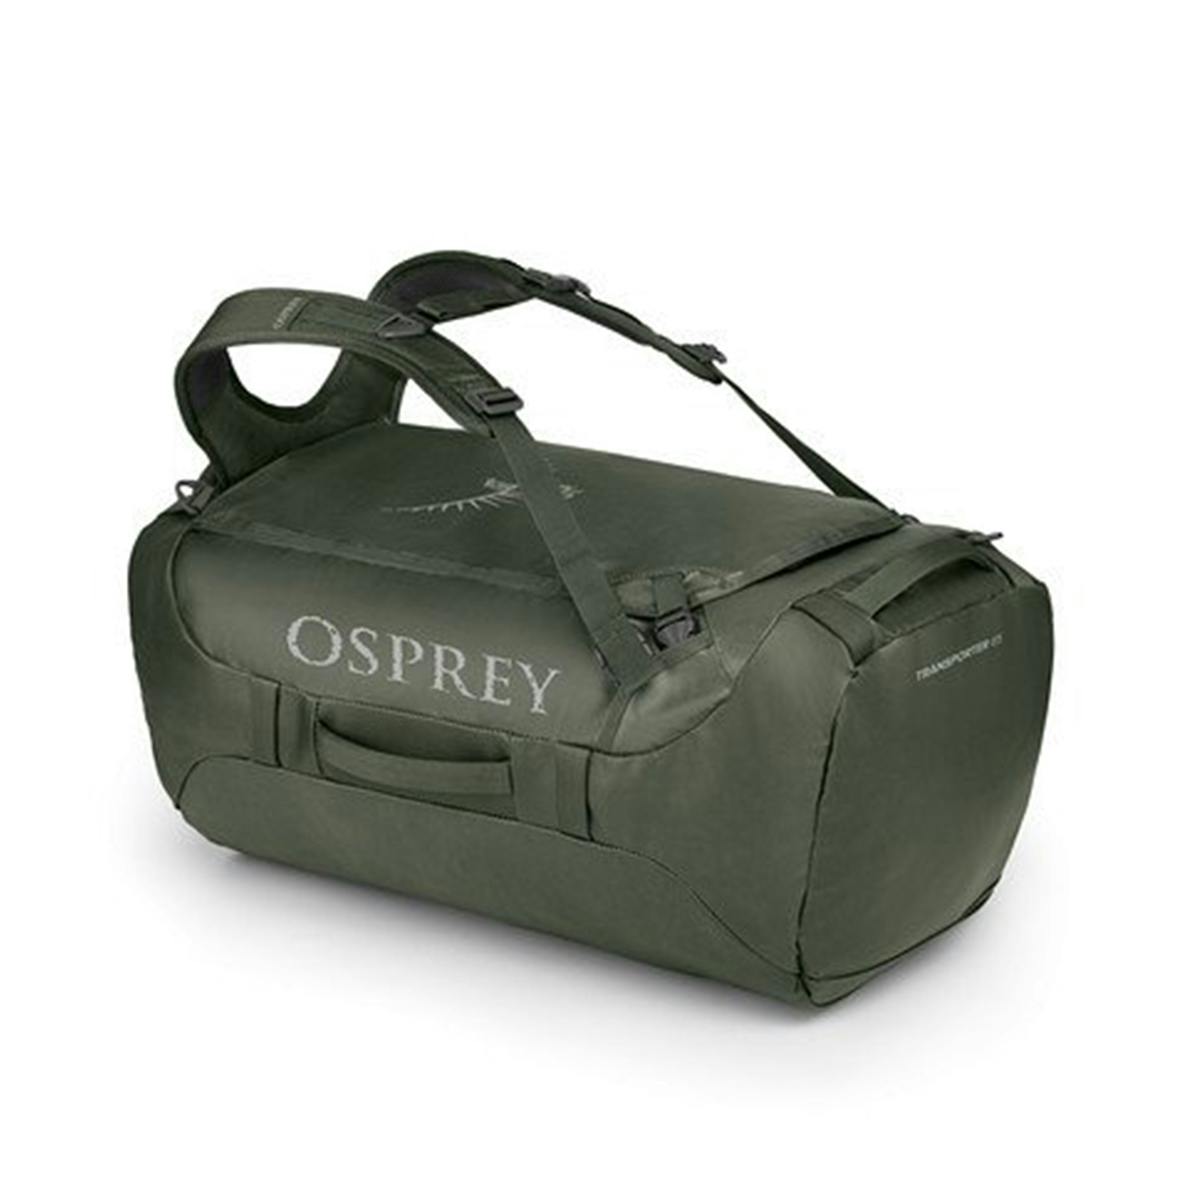 Osprey Transporter 65 Dive Gear Duffel Bag - 65 Liter - Haybale Green